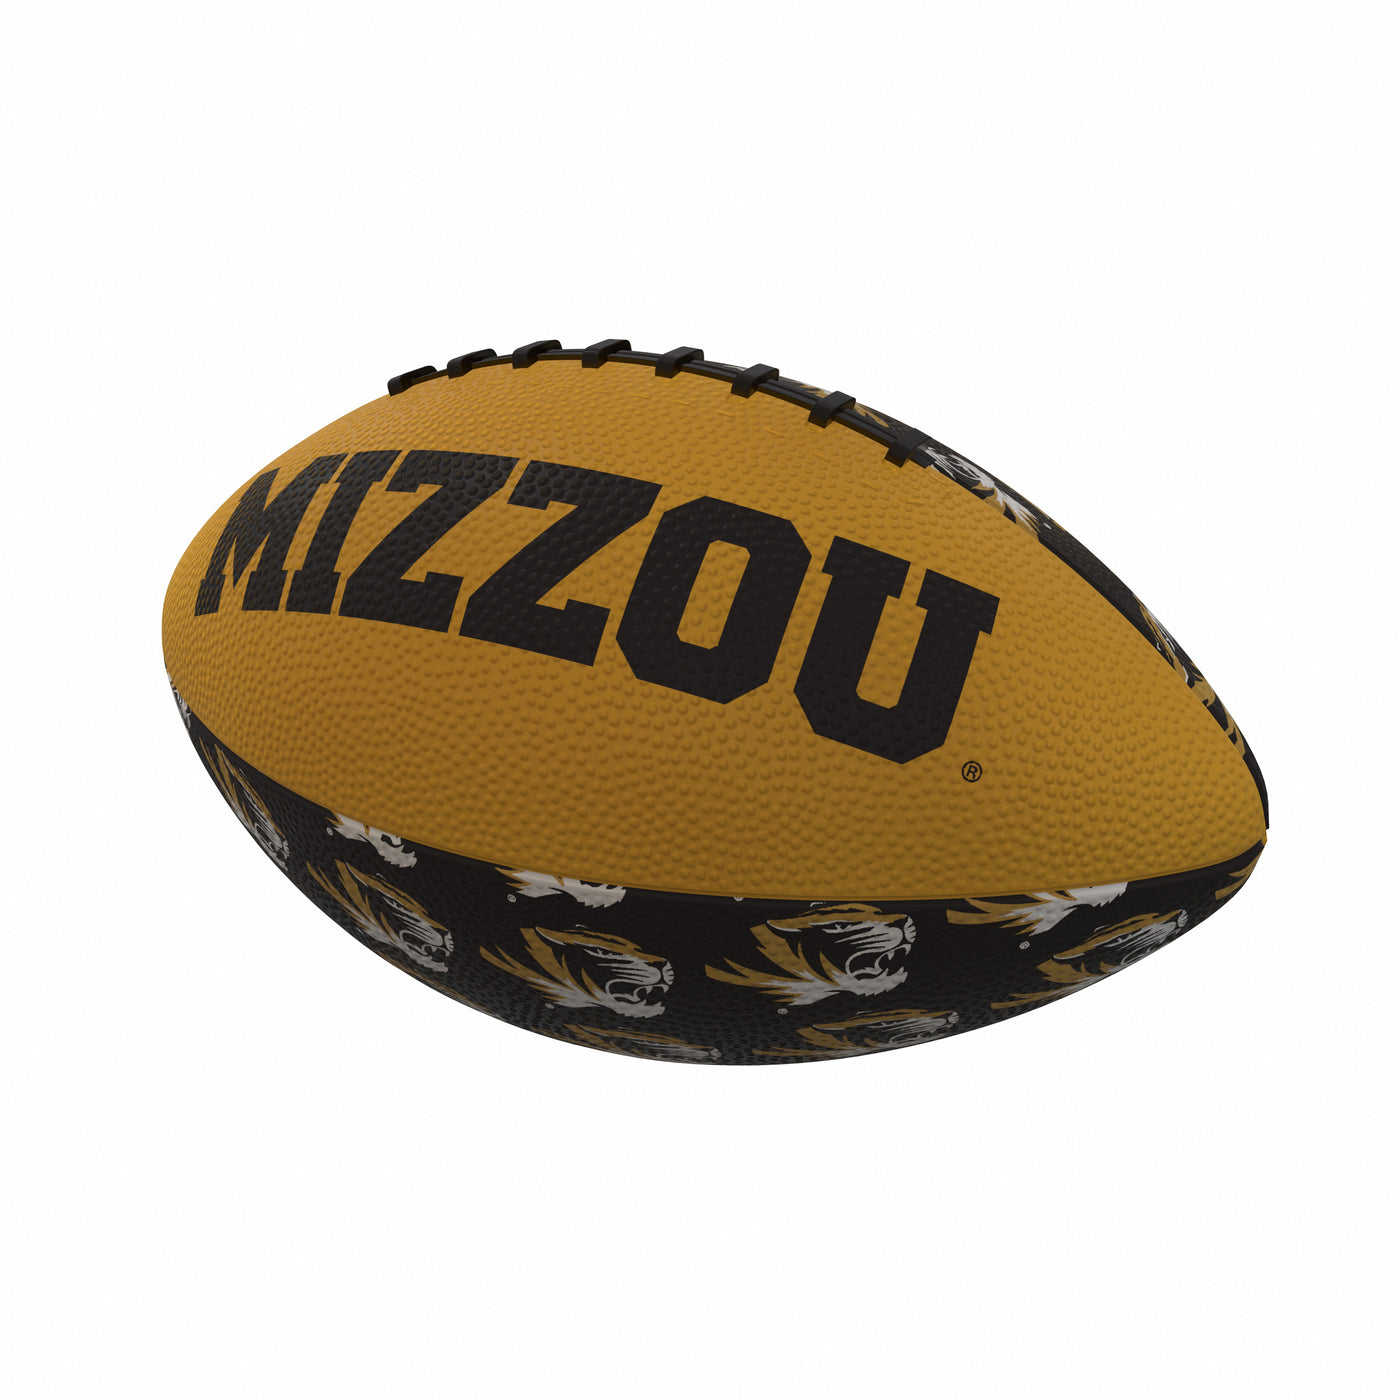 Missouri Repeating Mini-Size Rubber Football